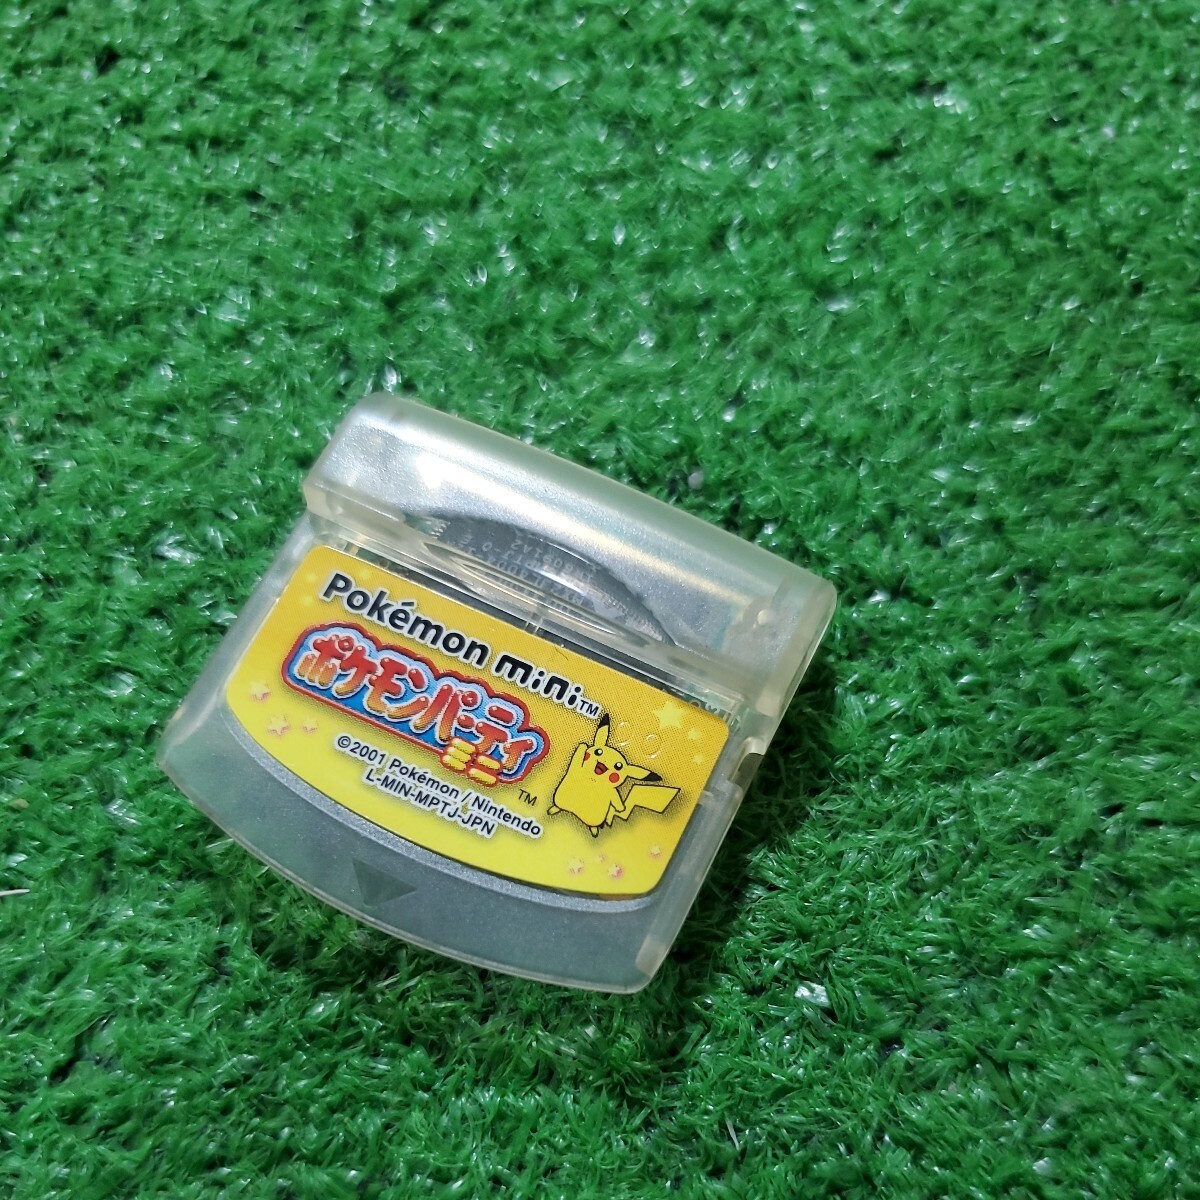 Pokemon mini ポケモンミニ 専用カートリッジ ポケモンパーティミニ 動作確認済み ゲームソフト 送料230円_画像1